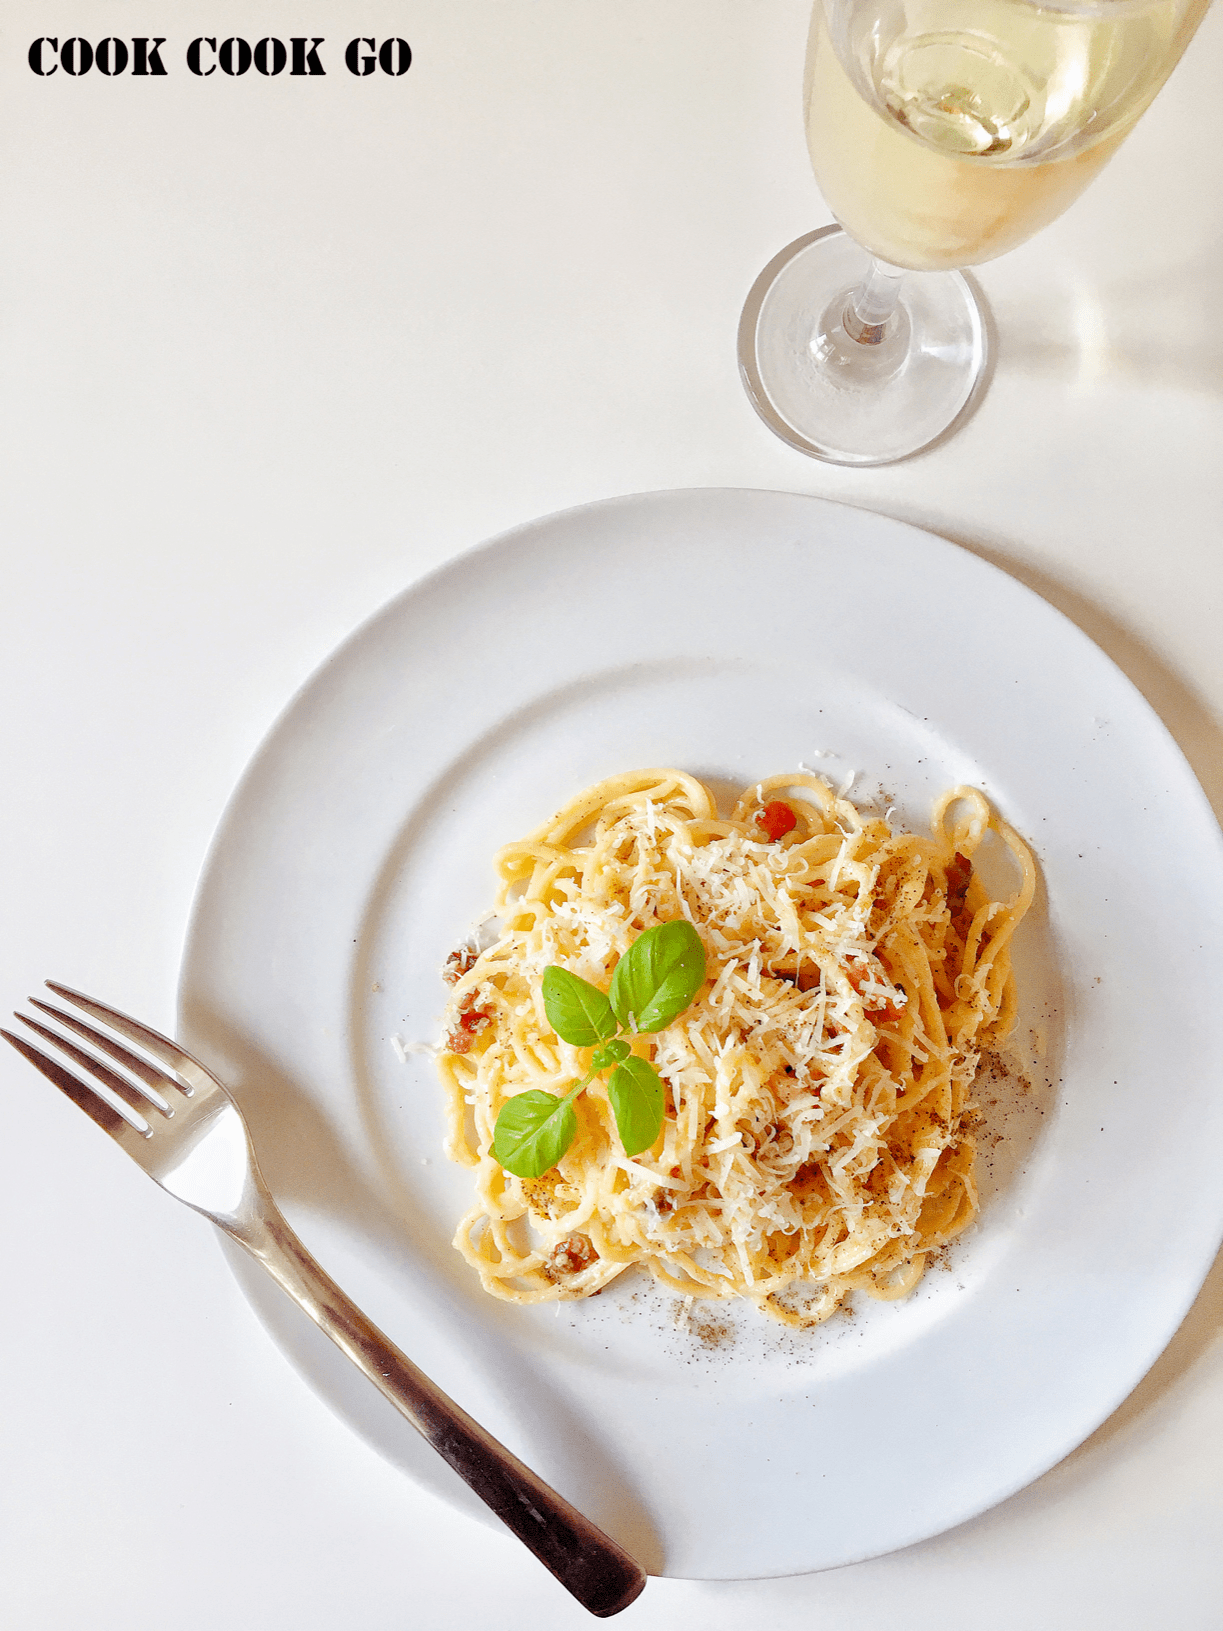 Spaghetti Carbonara with Parmesan cheese